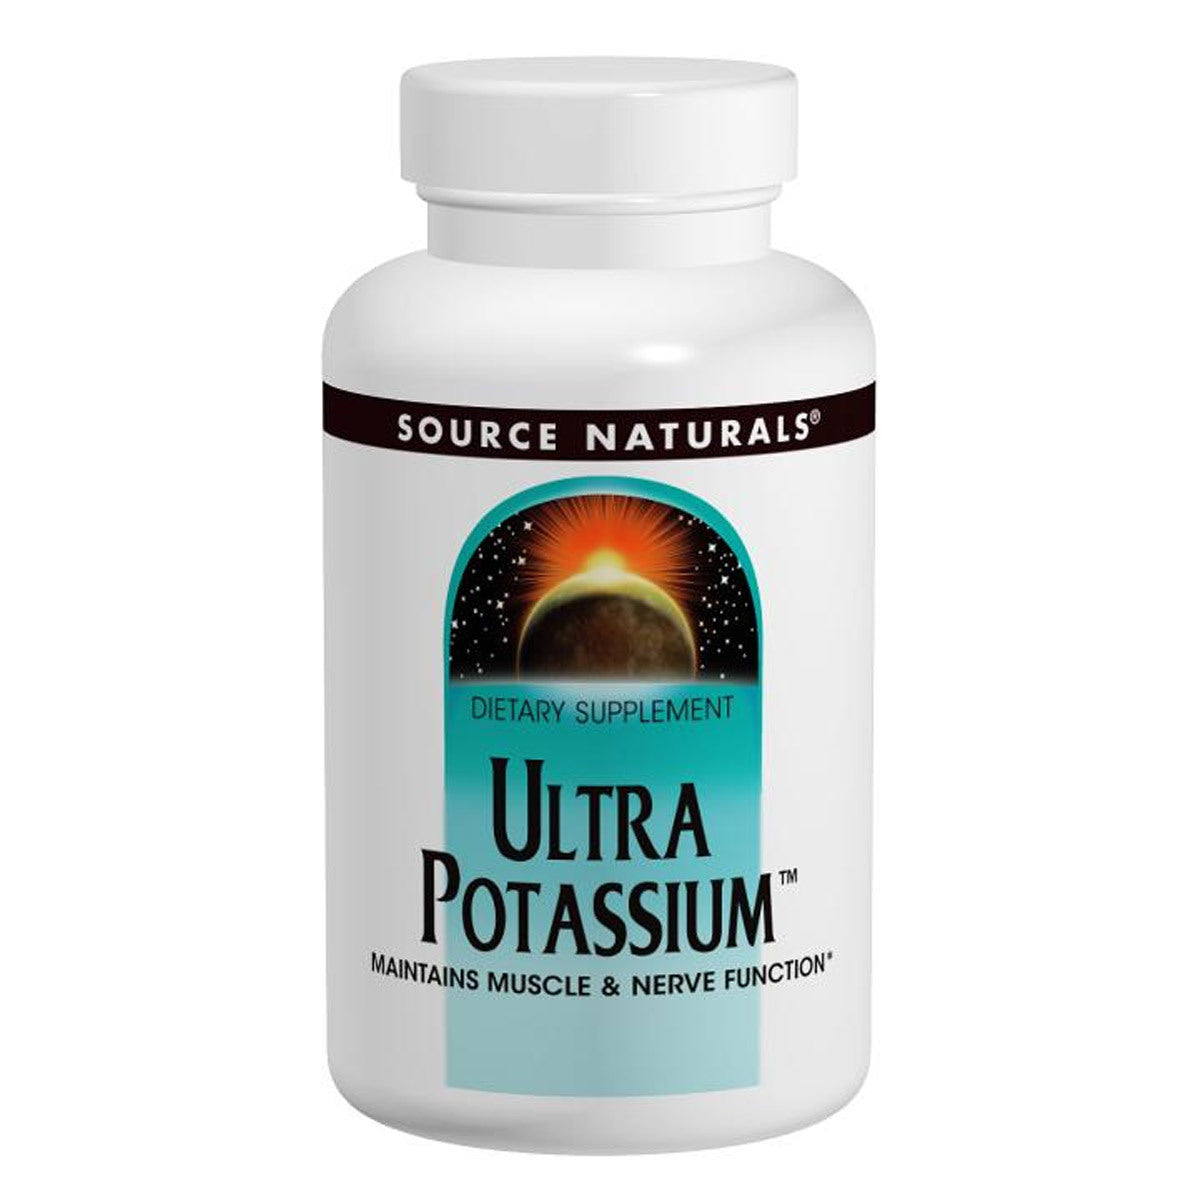 Primary image of Ultra Potassium